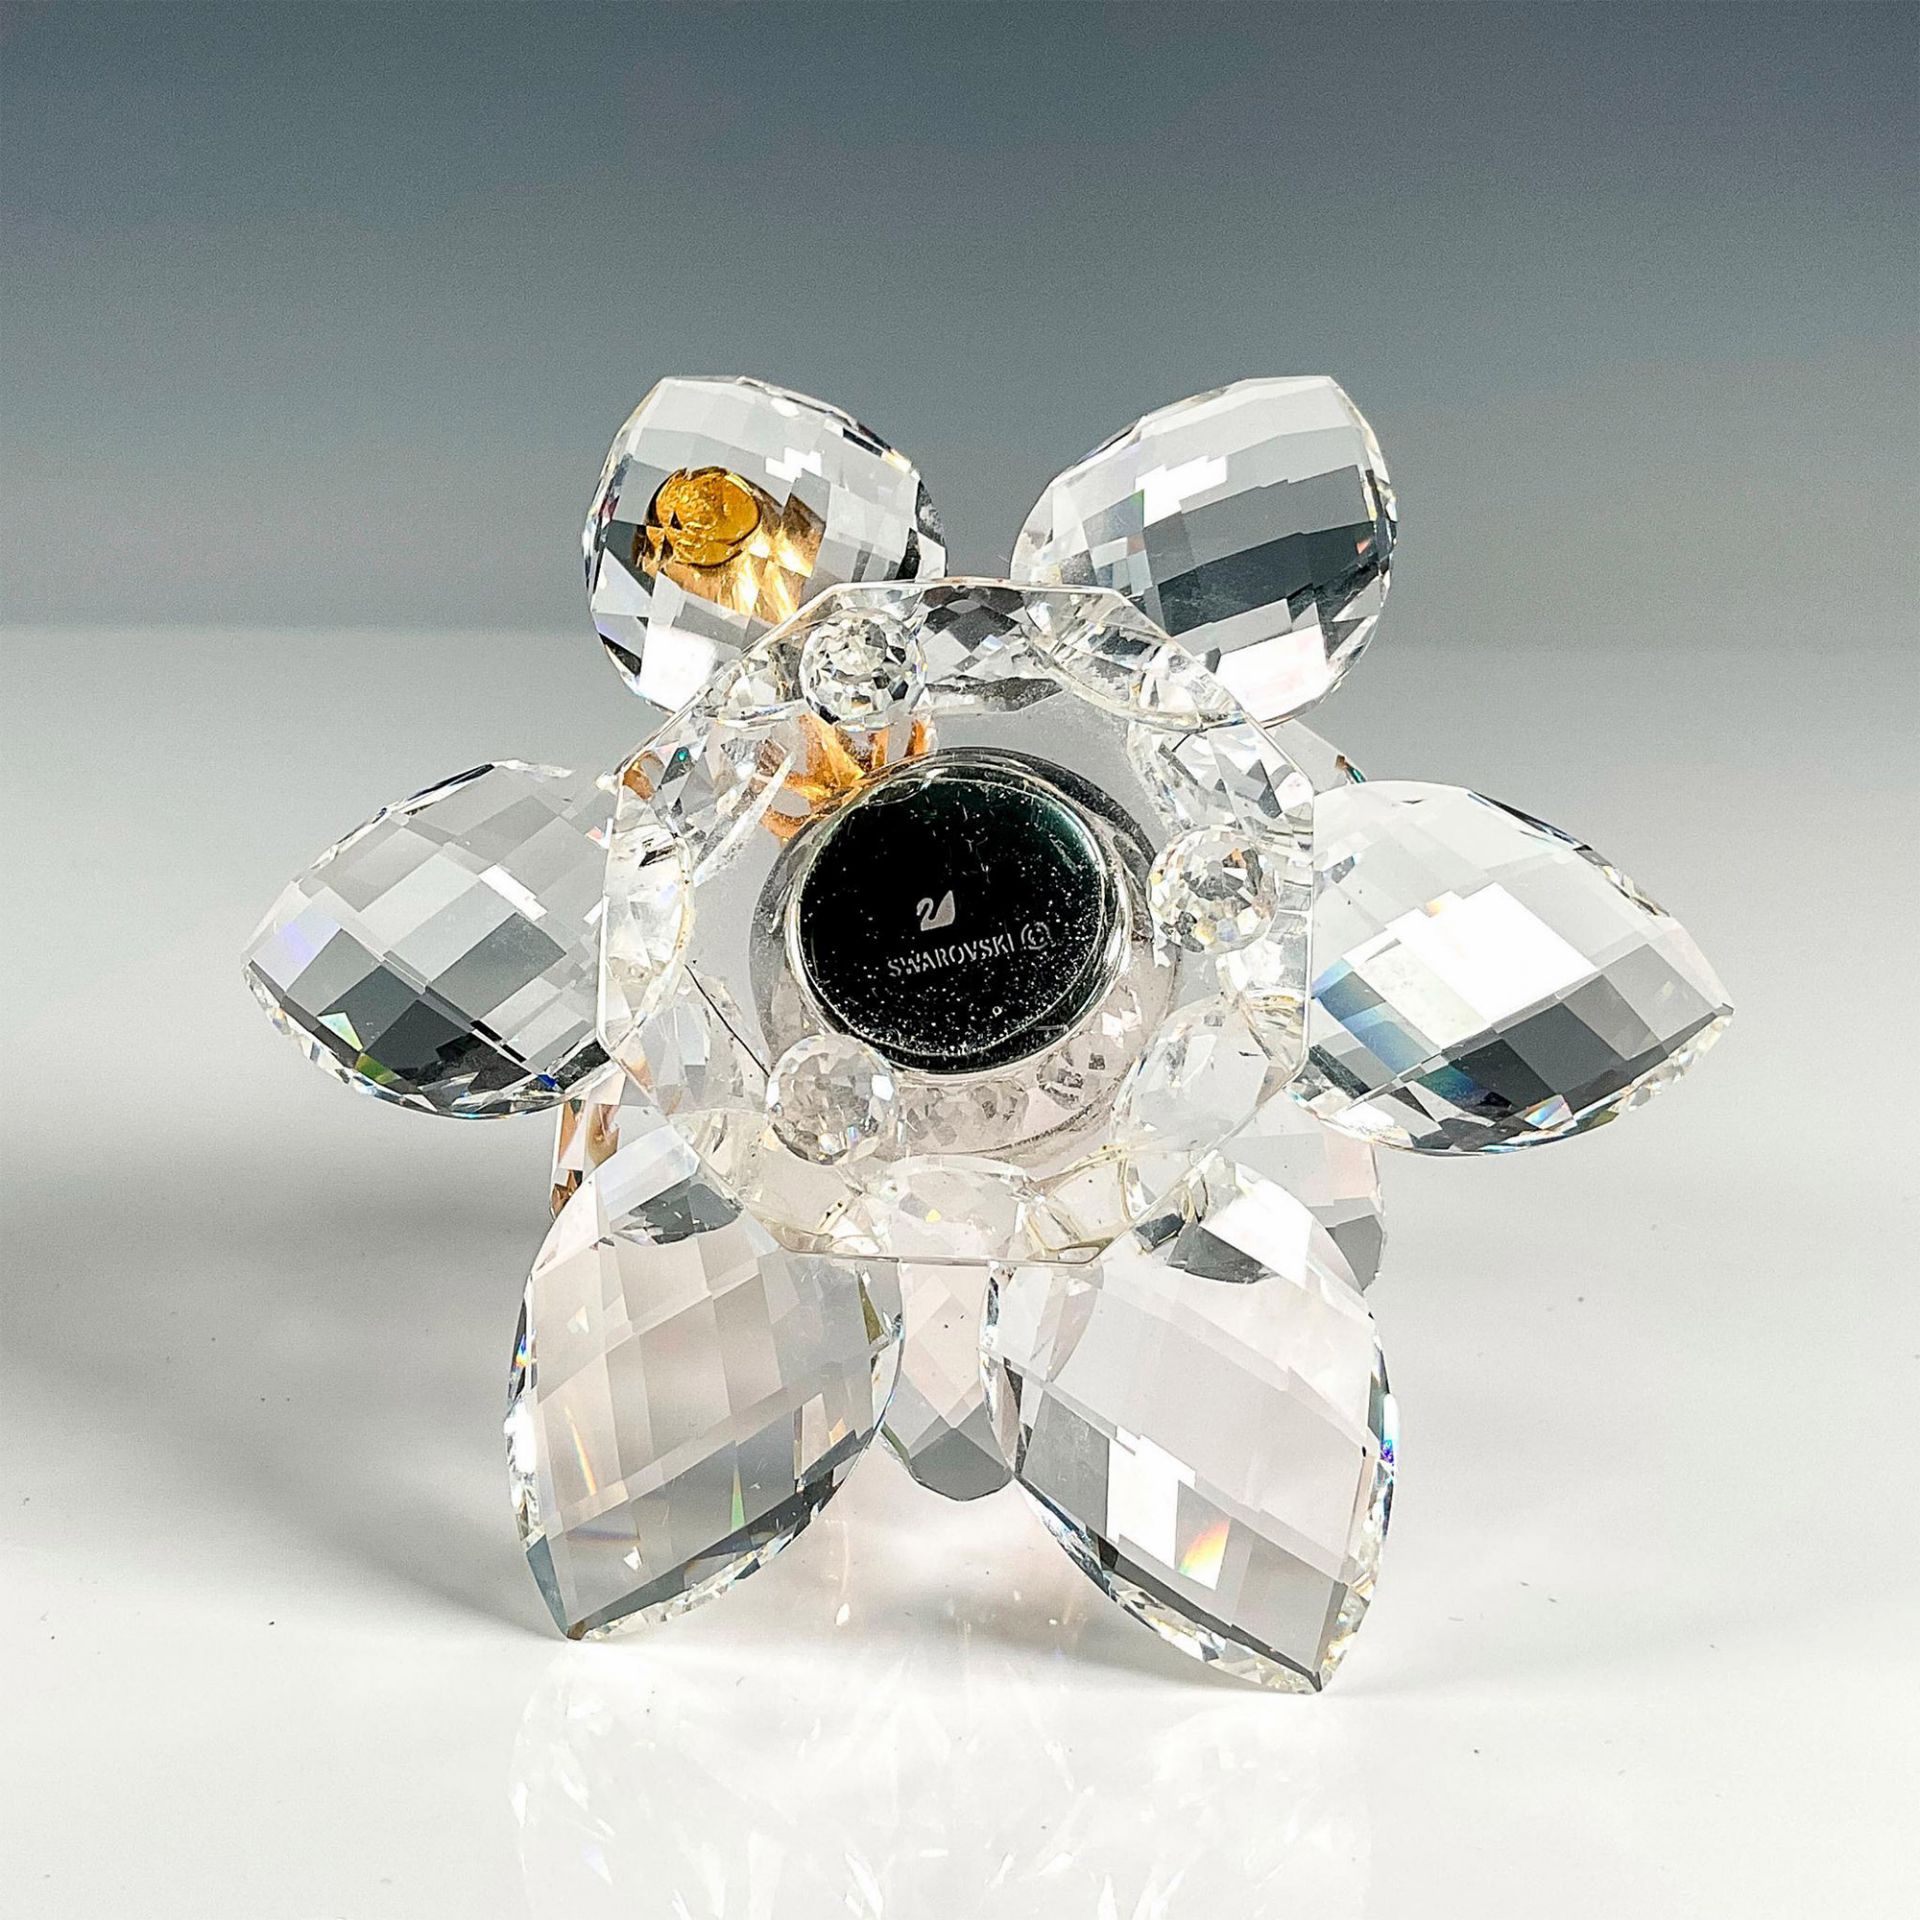 Swarovski Silver Crystal Figurine, Hummingbird in Flight - Image 3 of 4